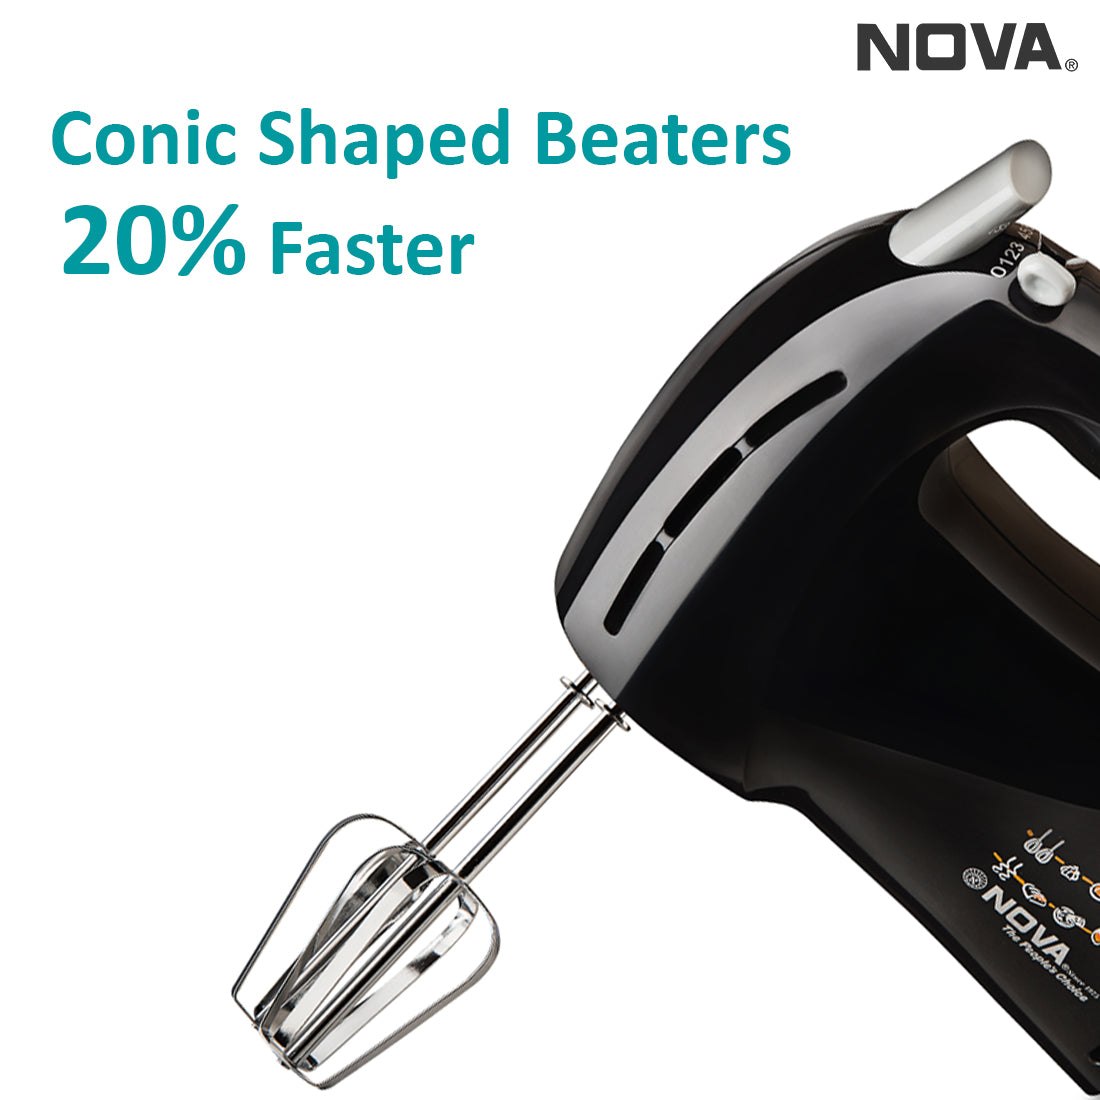 Nova Hand Mixer - Nm-62m, White: Buy Online at Best Price in UAE - Amazon.ae